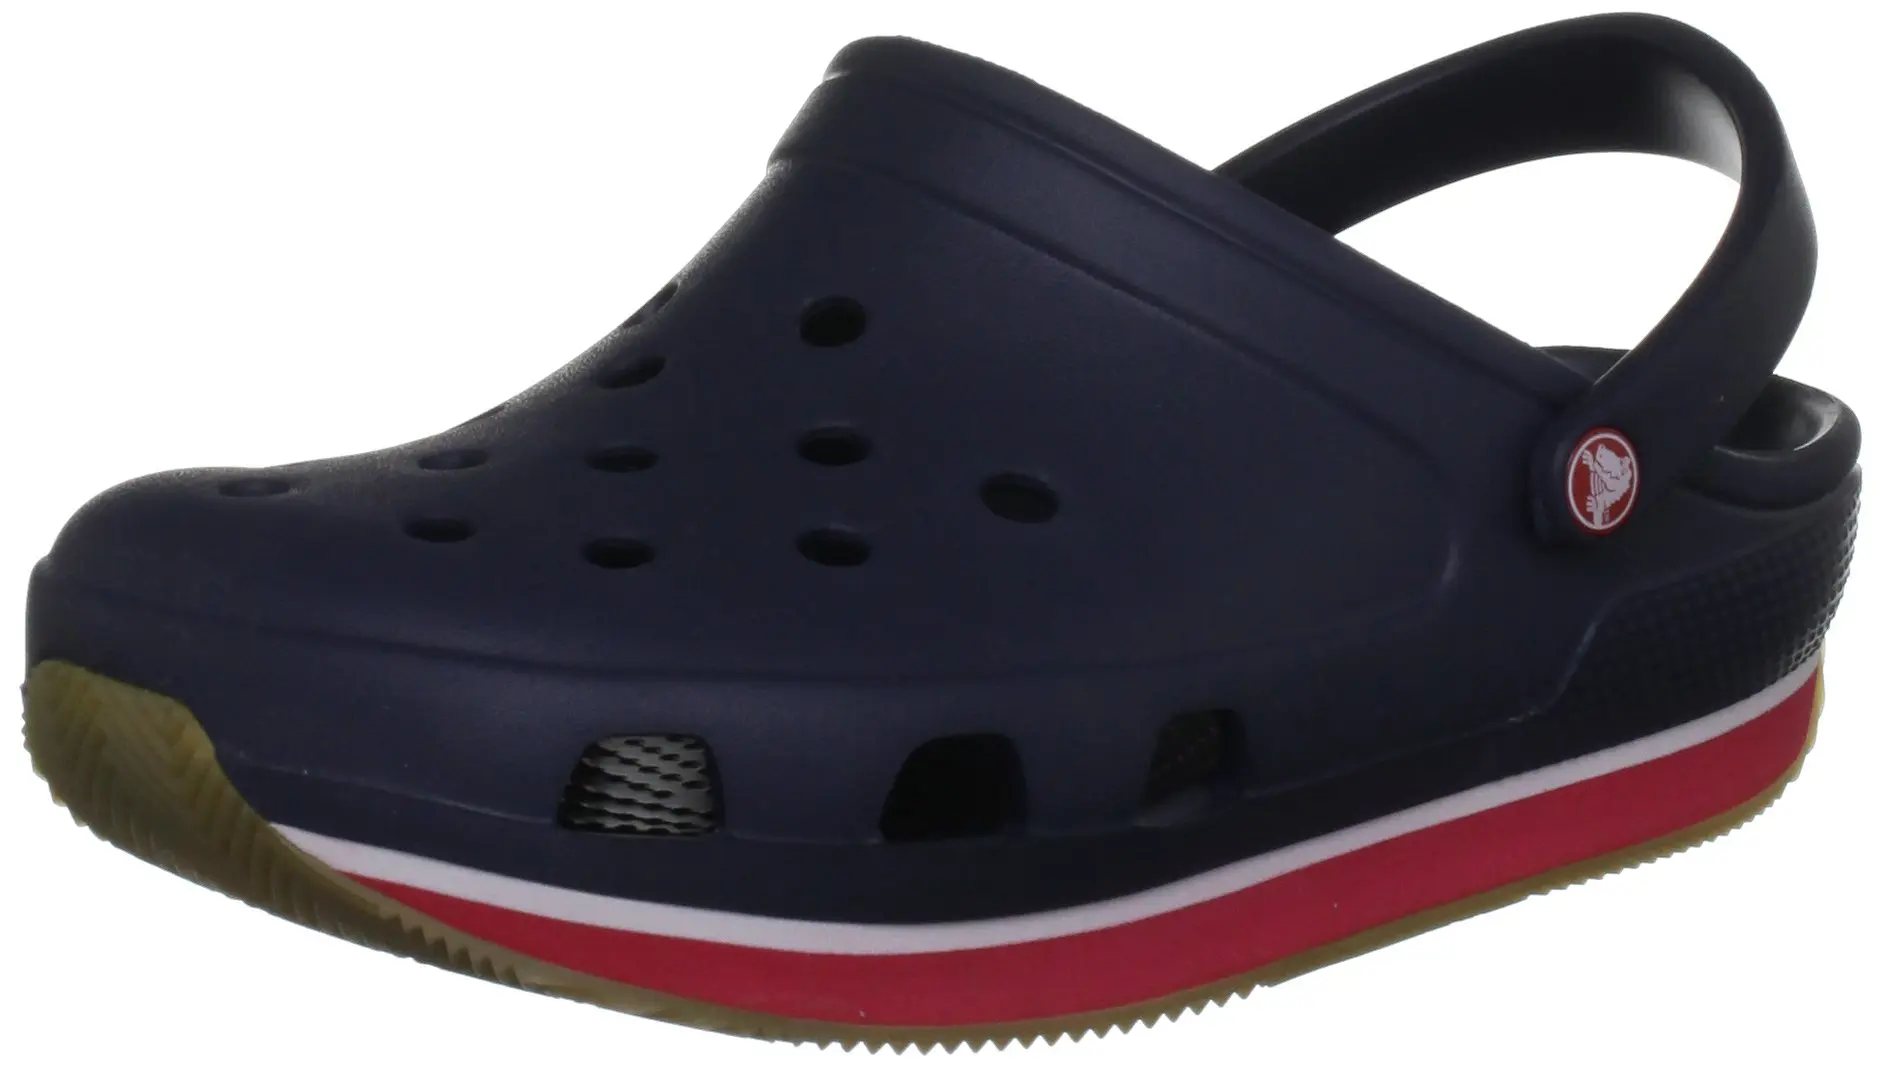 crocs bayaband flip flops